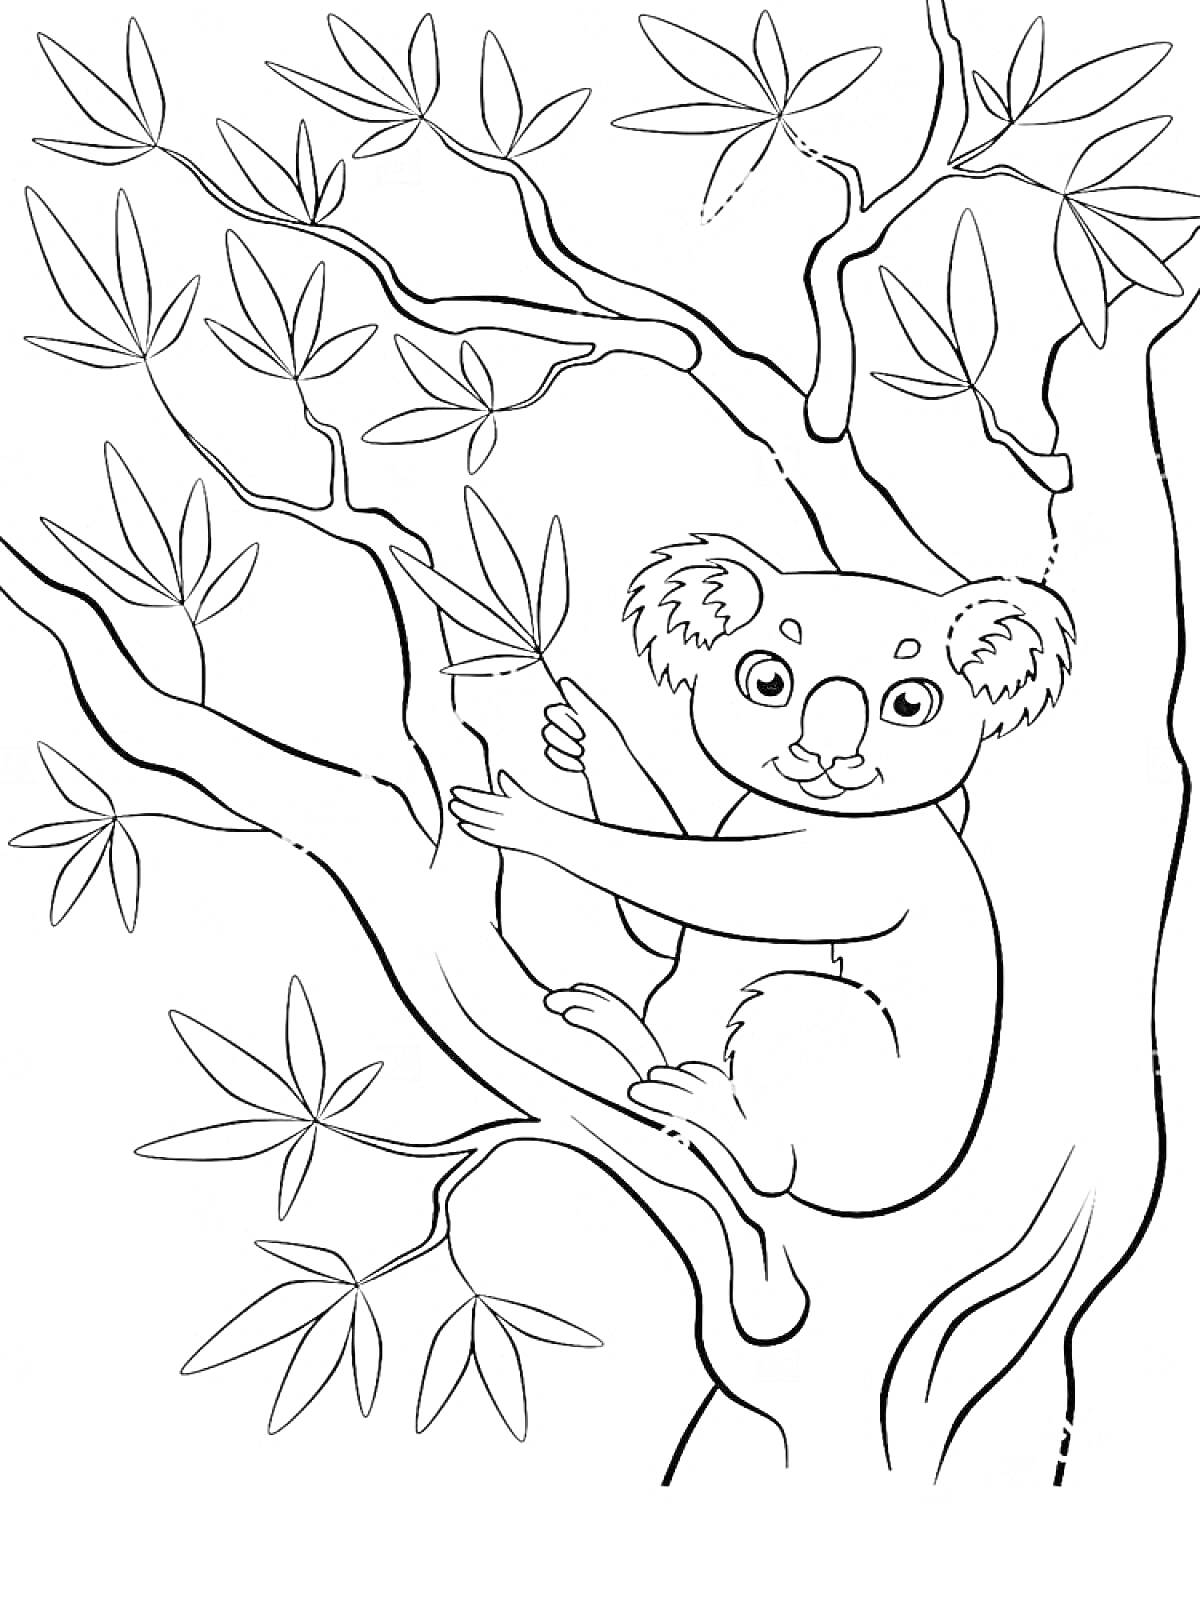 Раскраска Коала на дереве